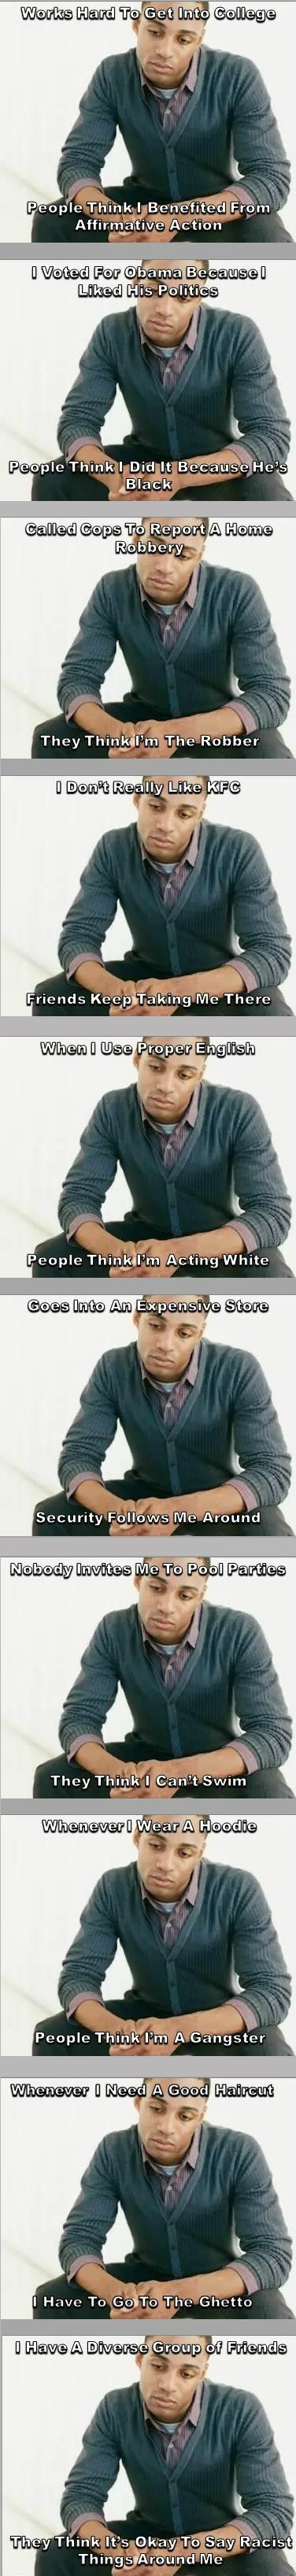 Black people problems.